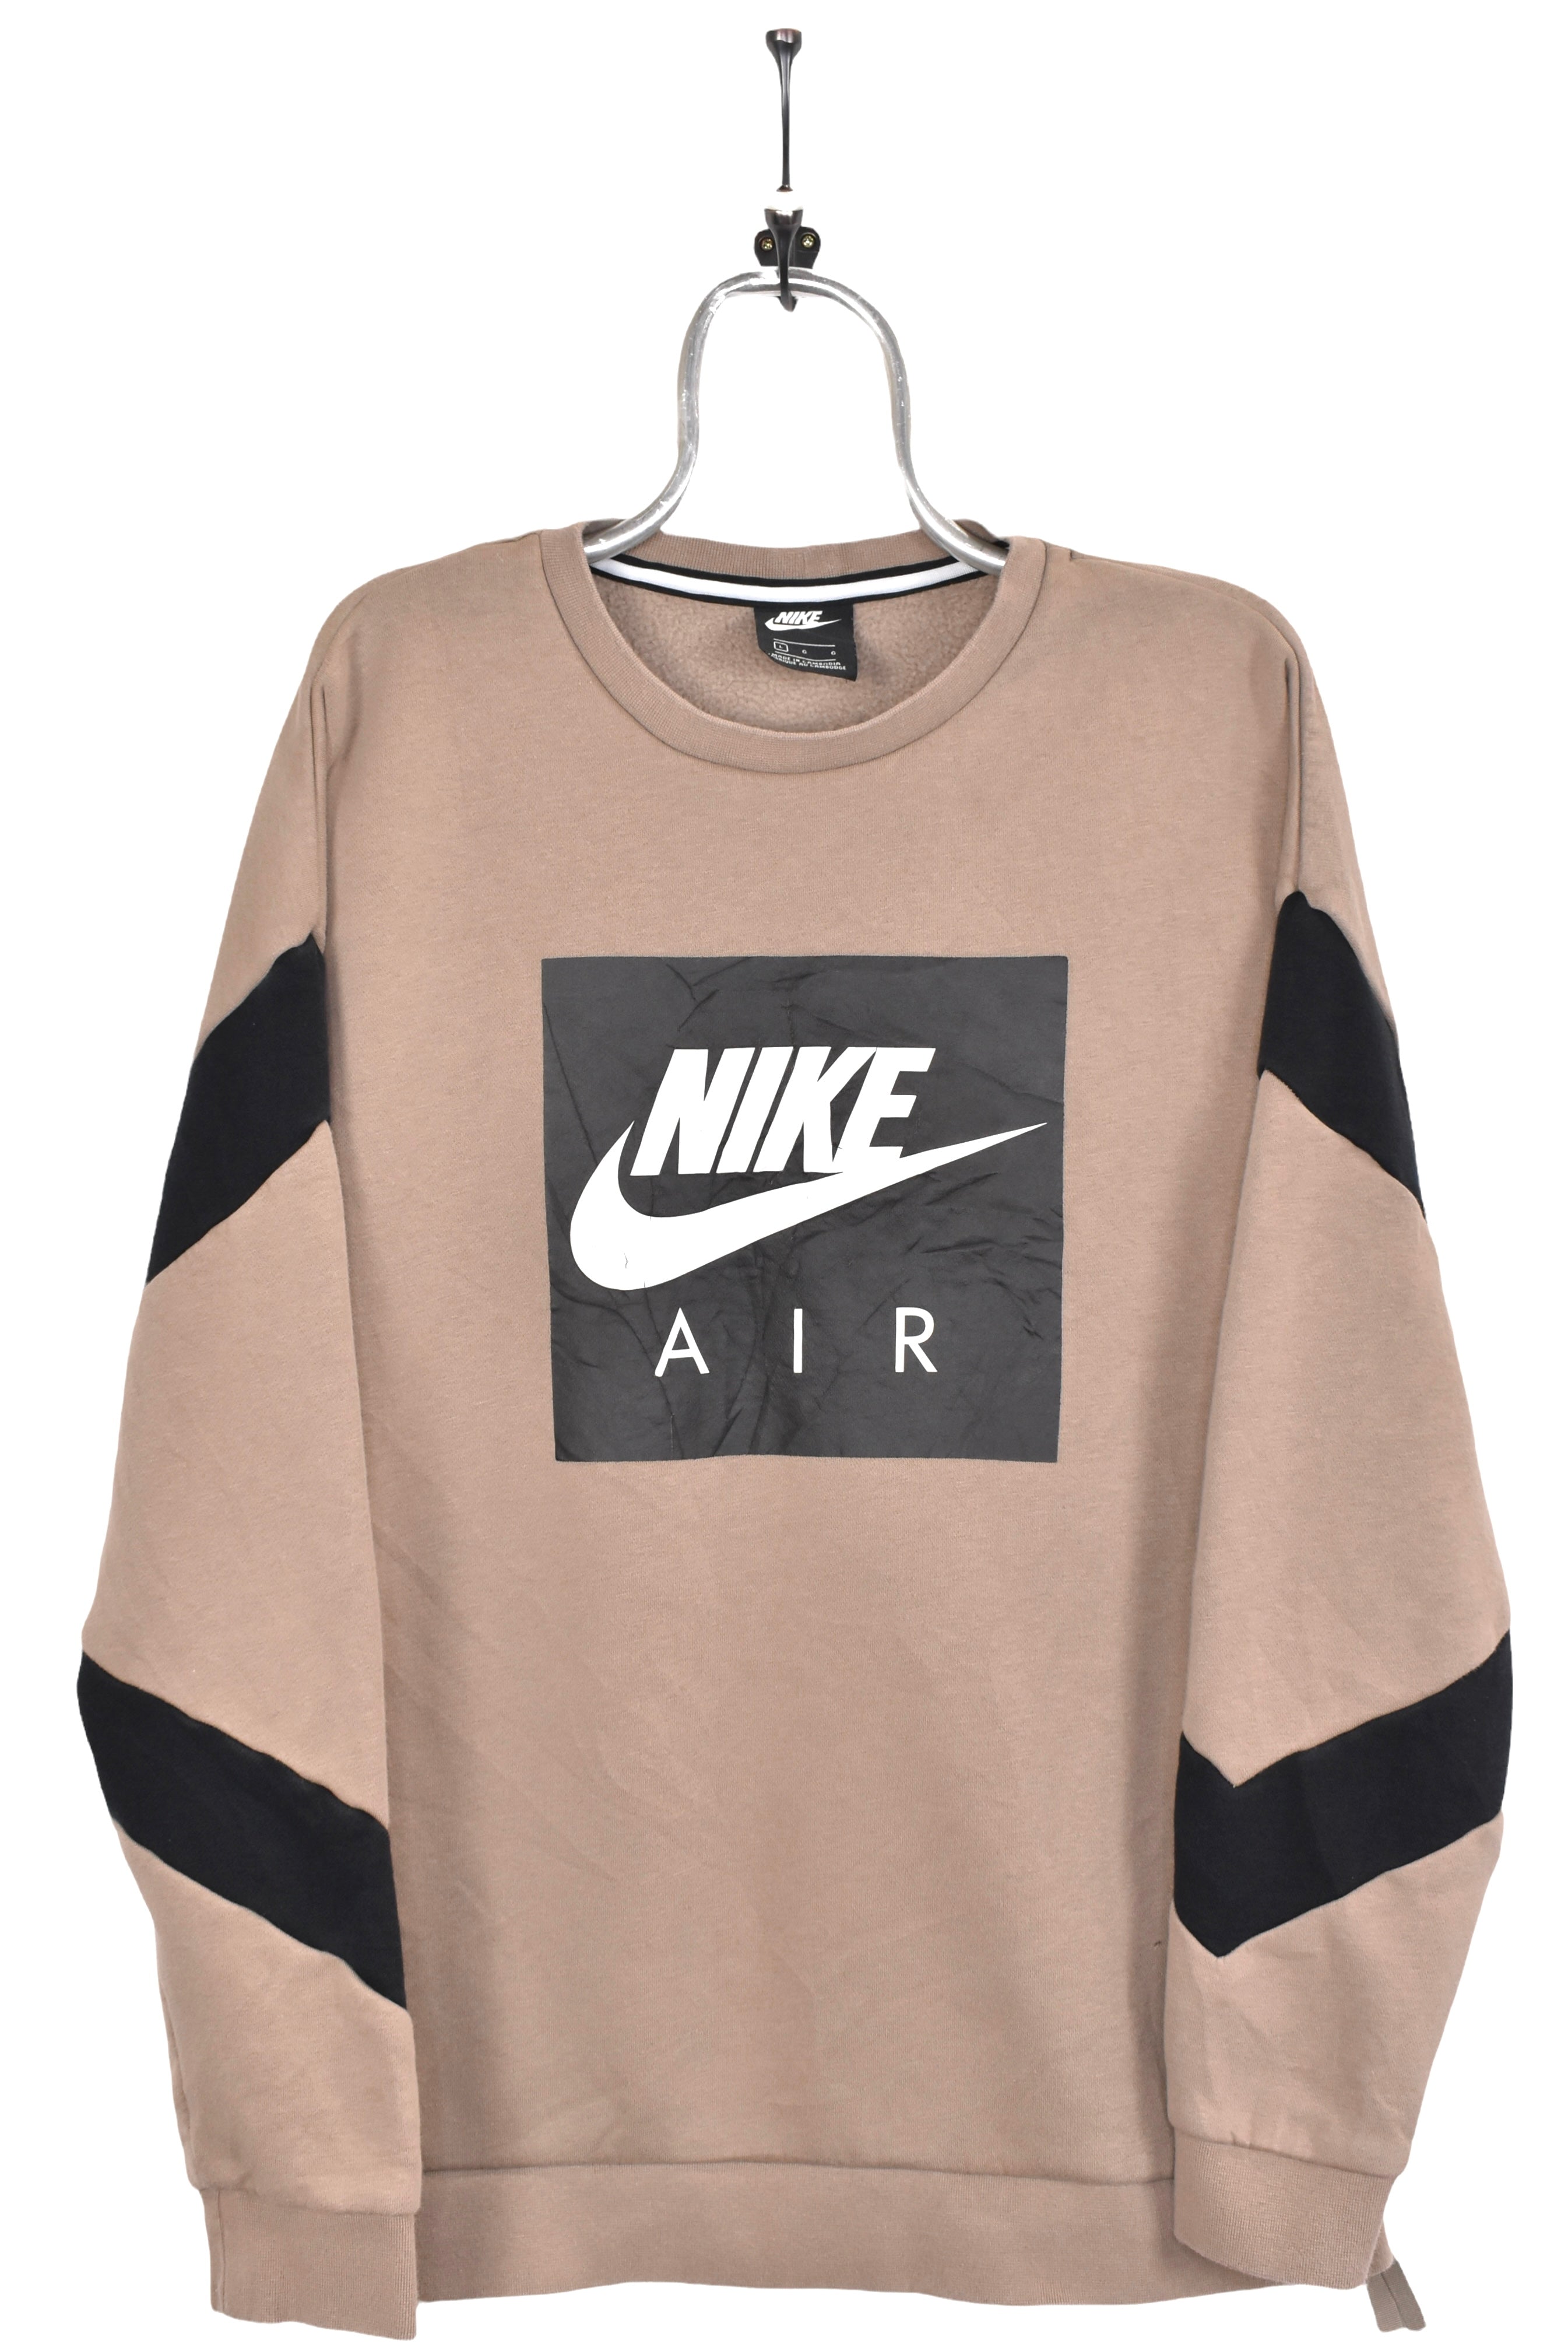 Vintage Nike sweatshirt, brown graphic crewneck - AU Large PRO SPORT